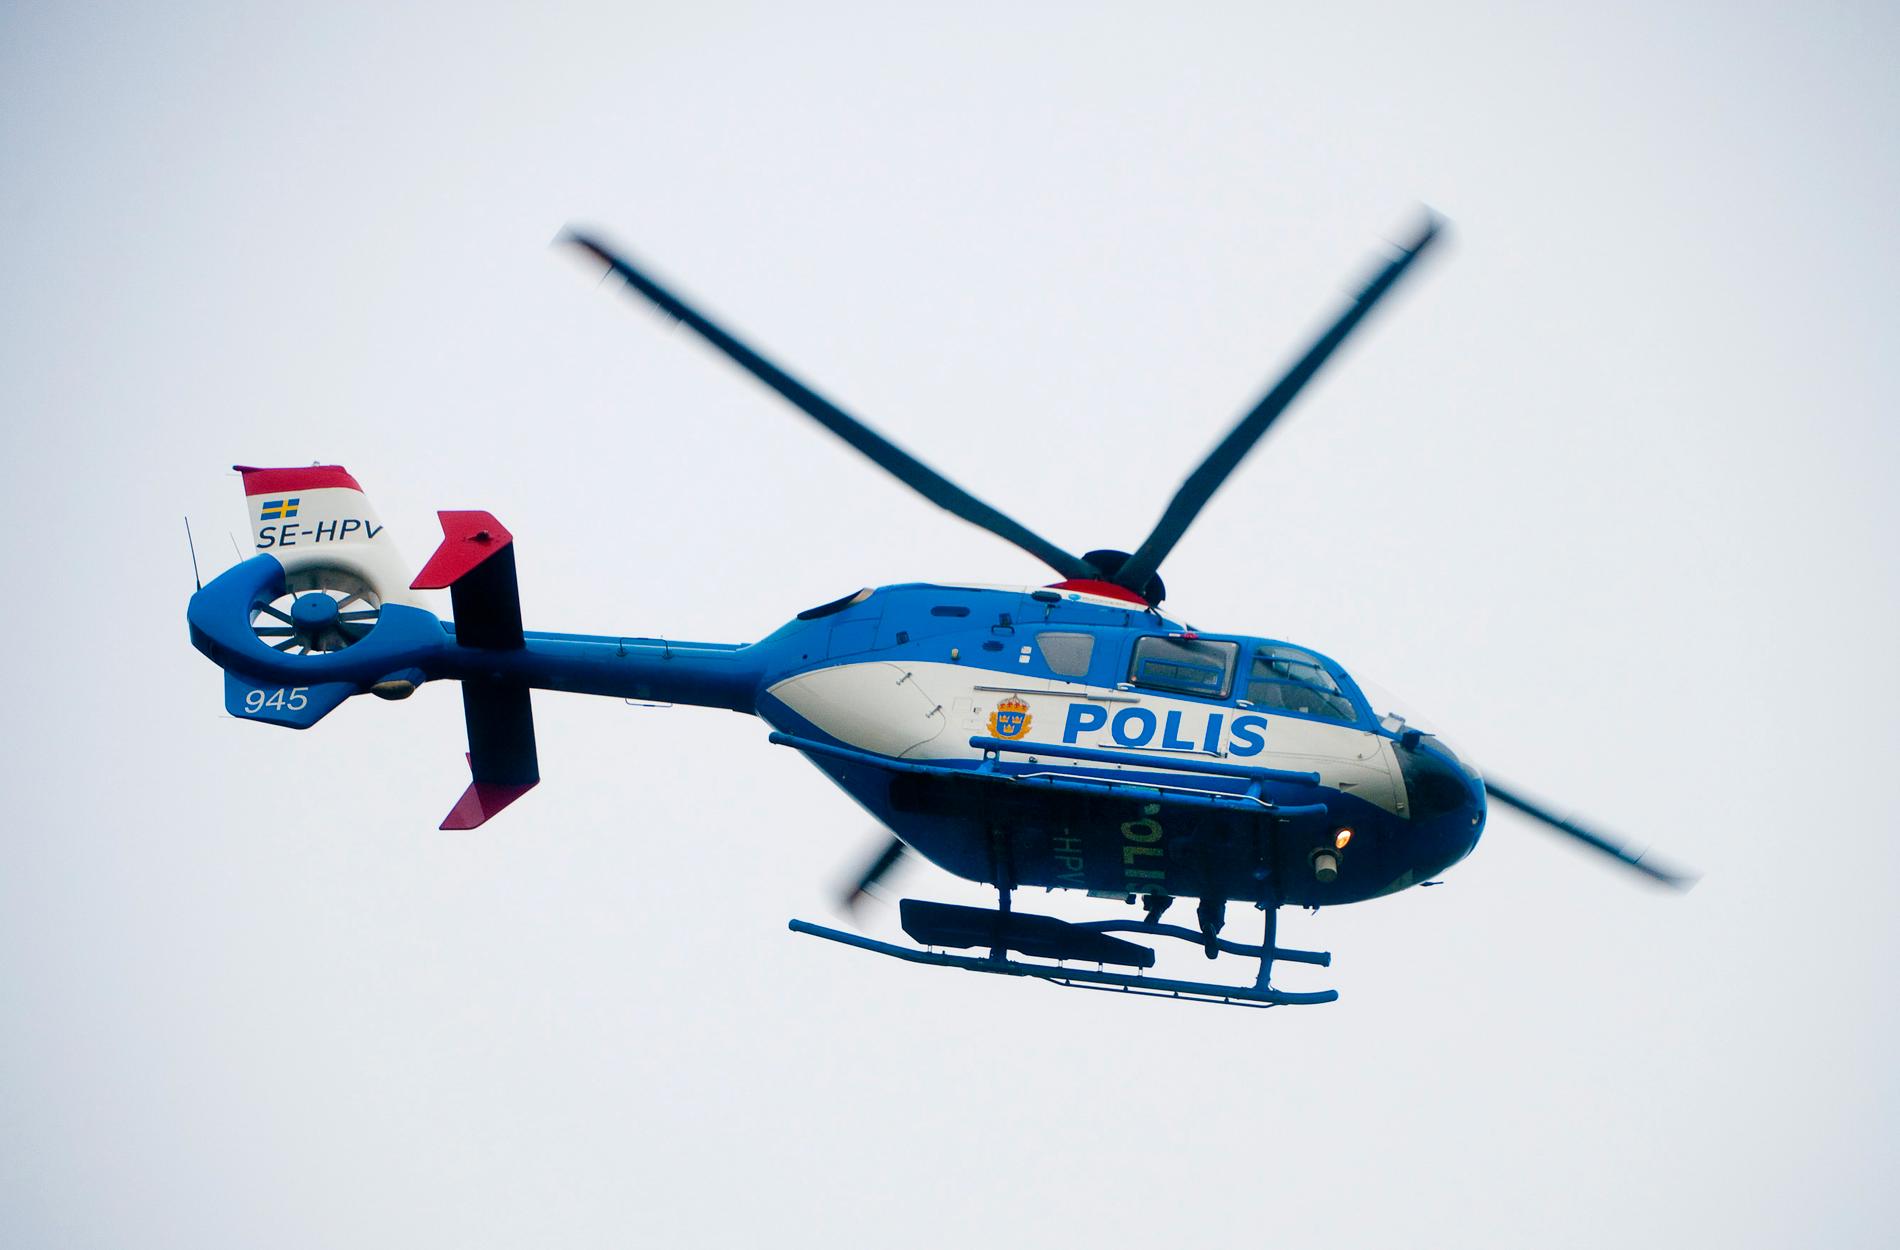 En norsk polishelikopter har kränkt svenskt territorium, menar svenska Utrikesdepartementet. Arkivbild.